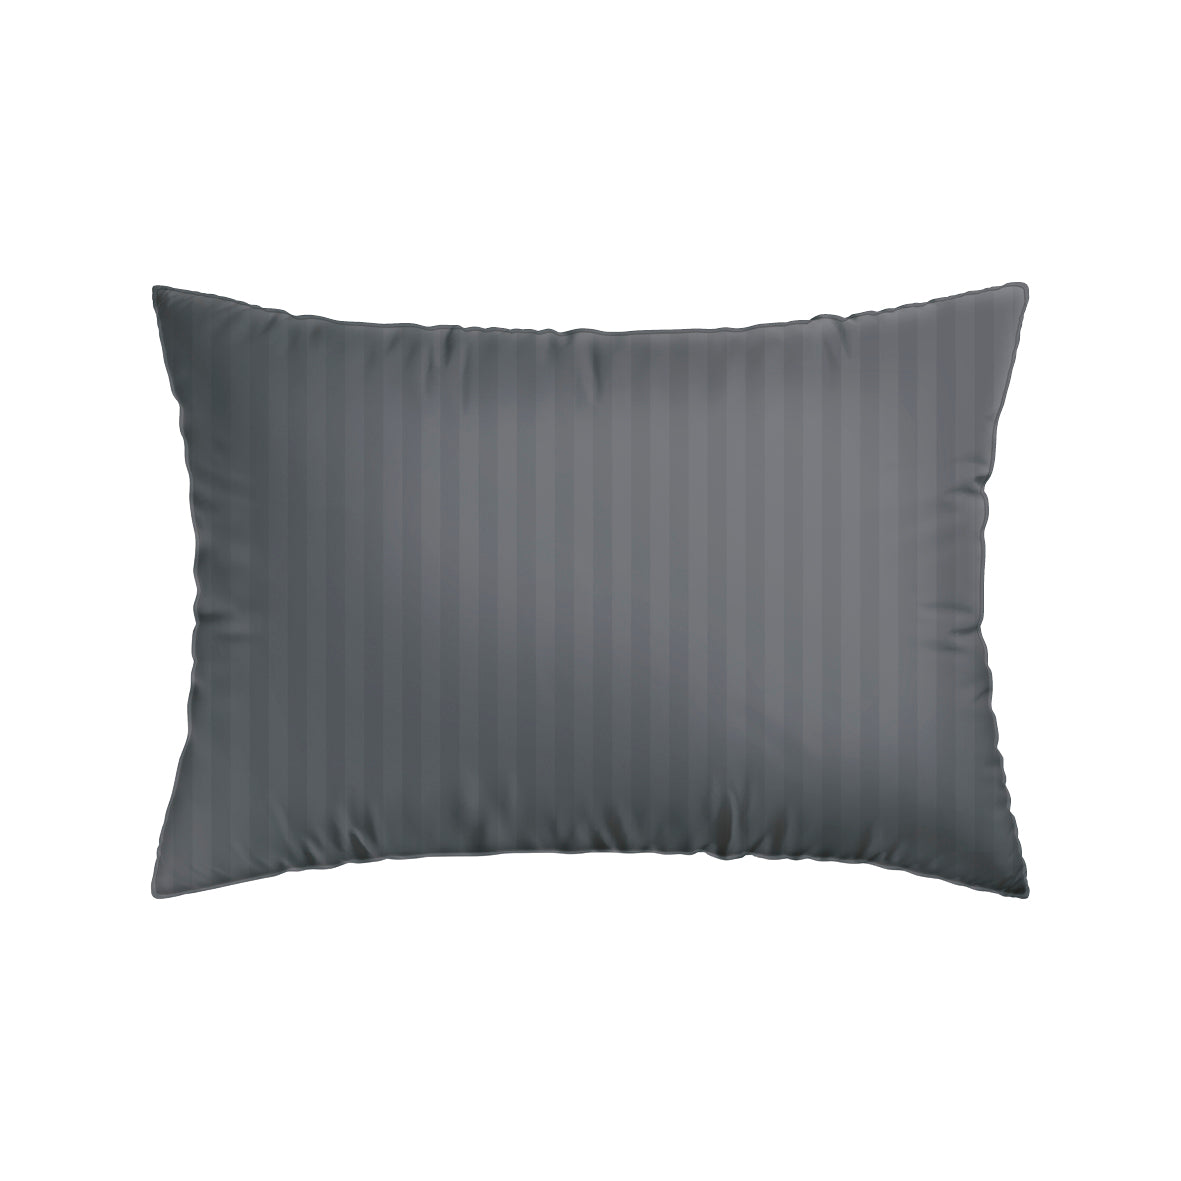 Pillowcase(s) in cotton satin - Dobby stripe dark grey